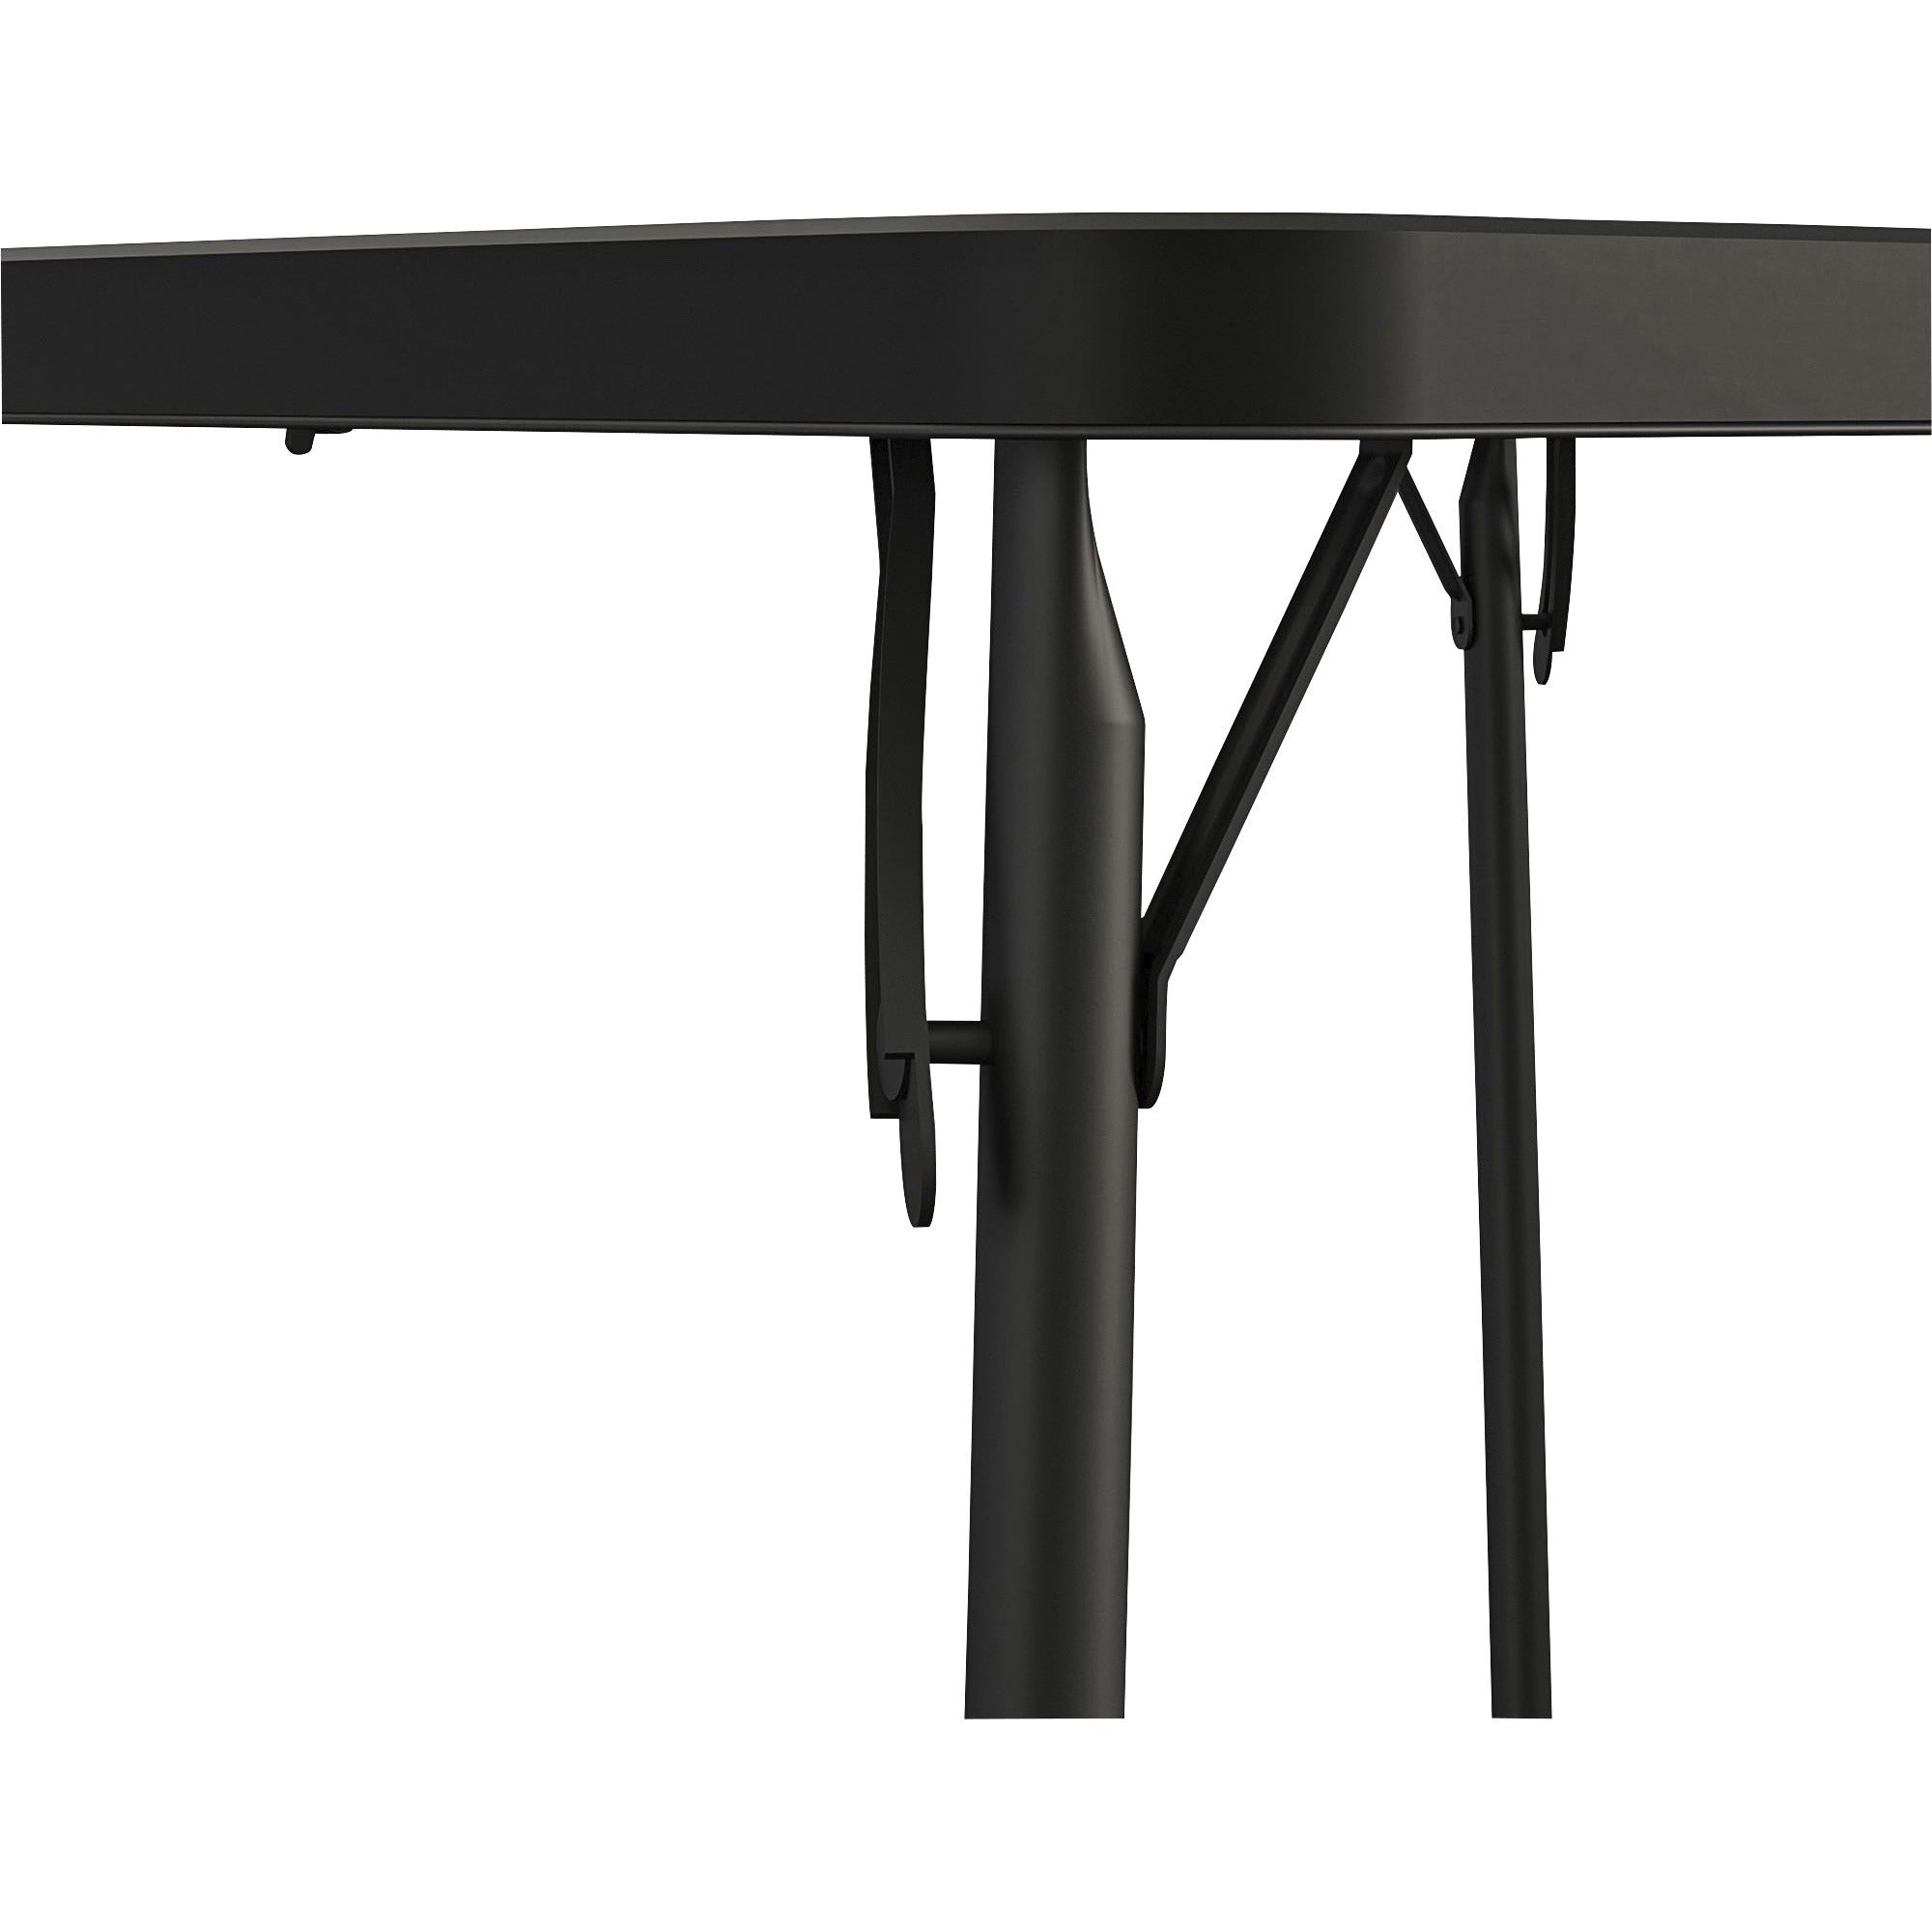 cosco-xl-fold-in-half-card-table-four-leg-base-4-legs-200-lb-capacity-x-3850-table-top-width-x-3850-table-top-depth-2950-height-black-1-each_csc14036blk1e - 4